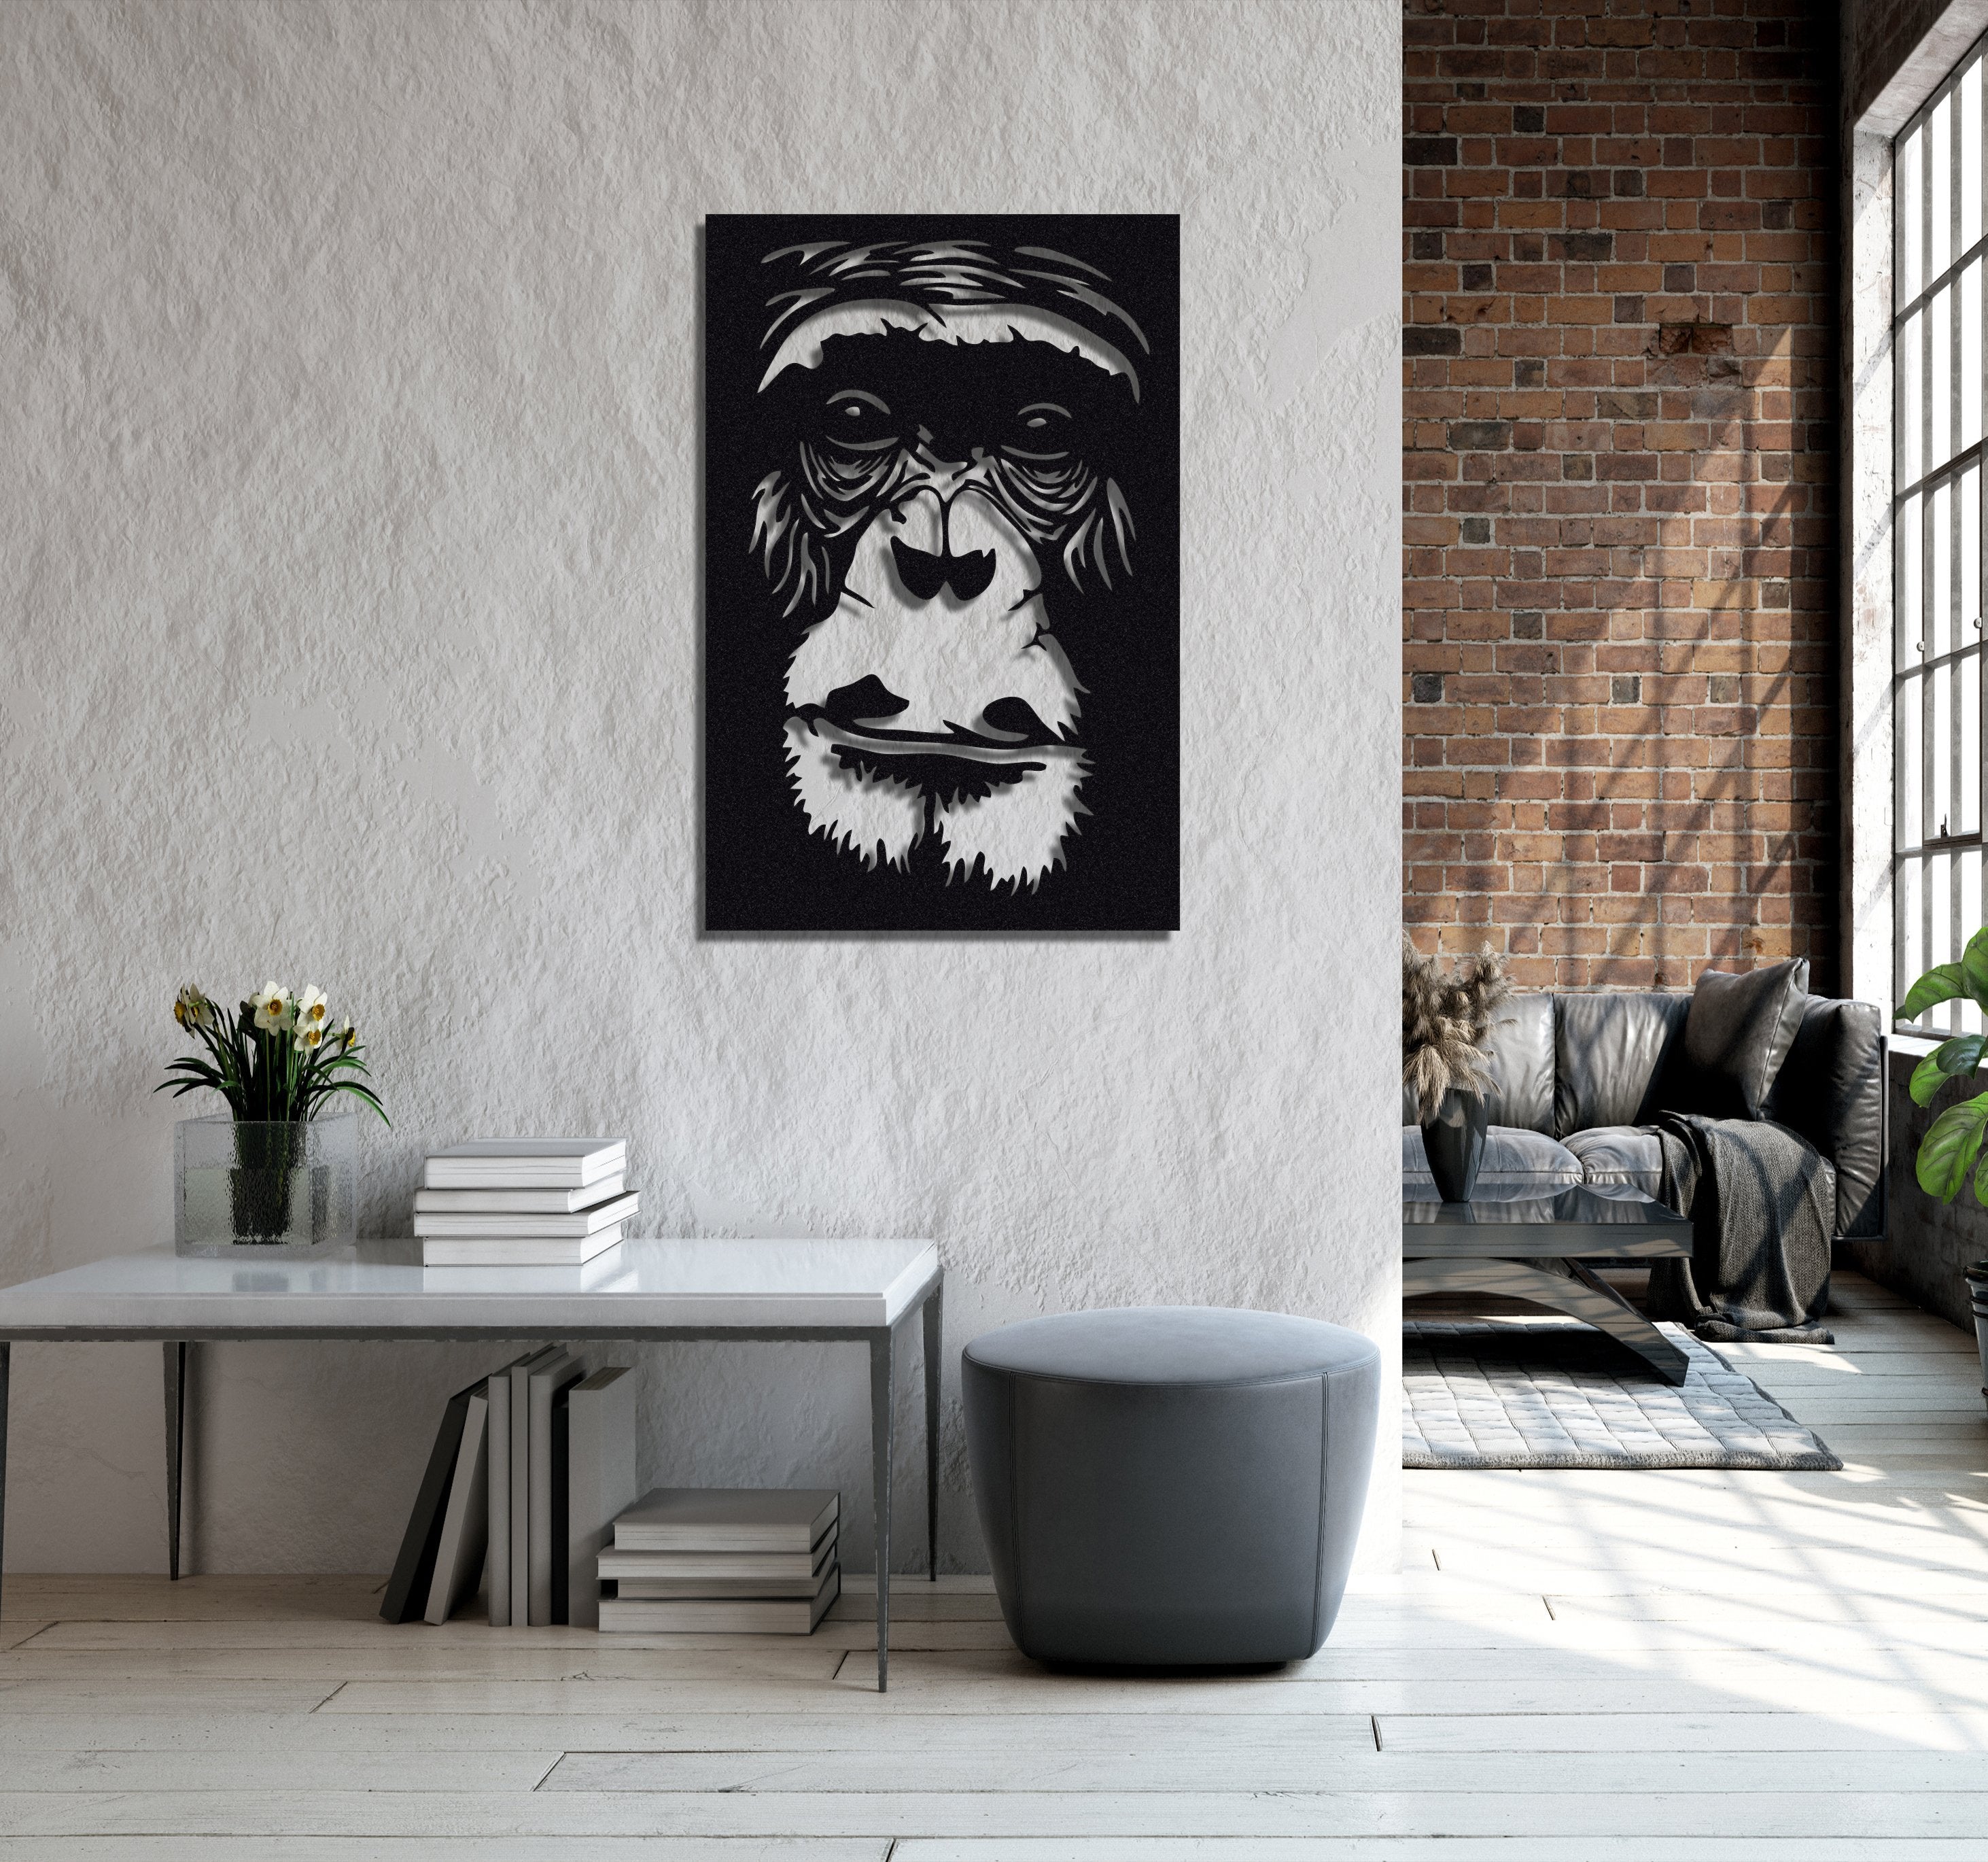 ・"Gorilla Face"・Premium Metal Wall Art - Limited Edition